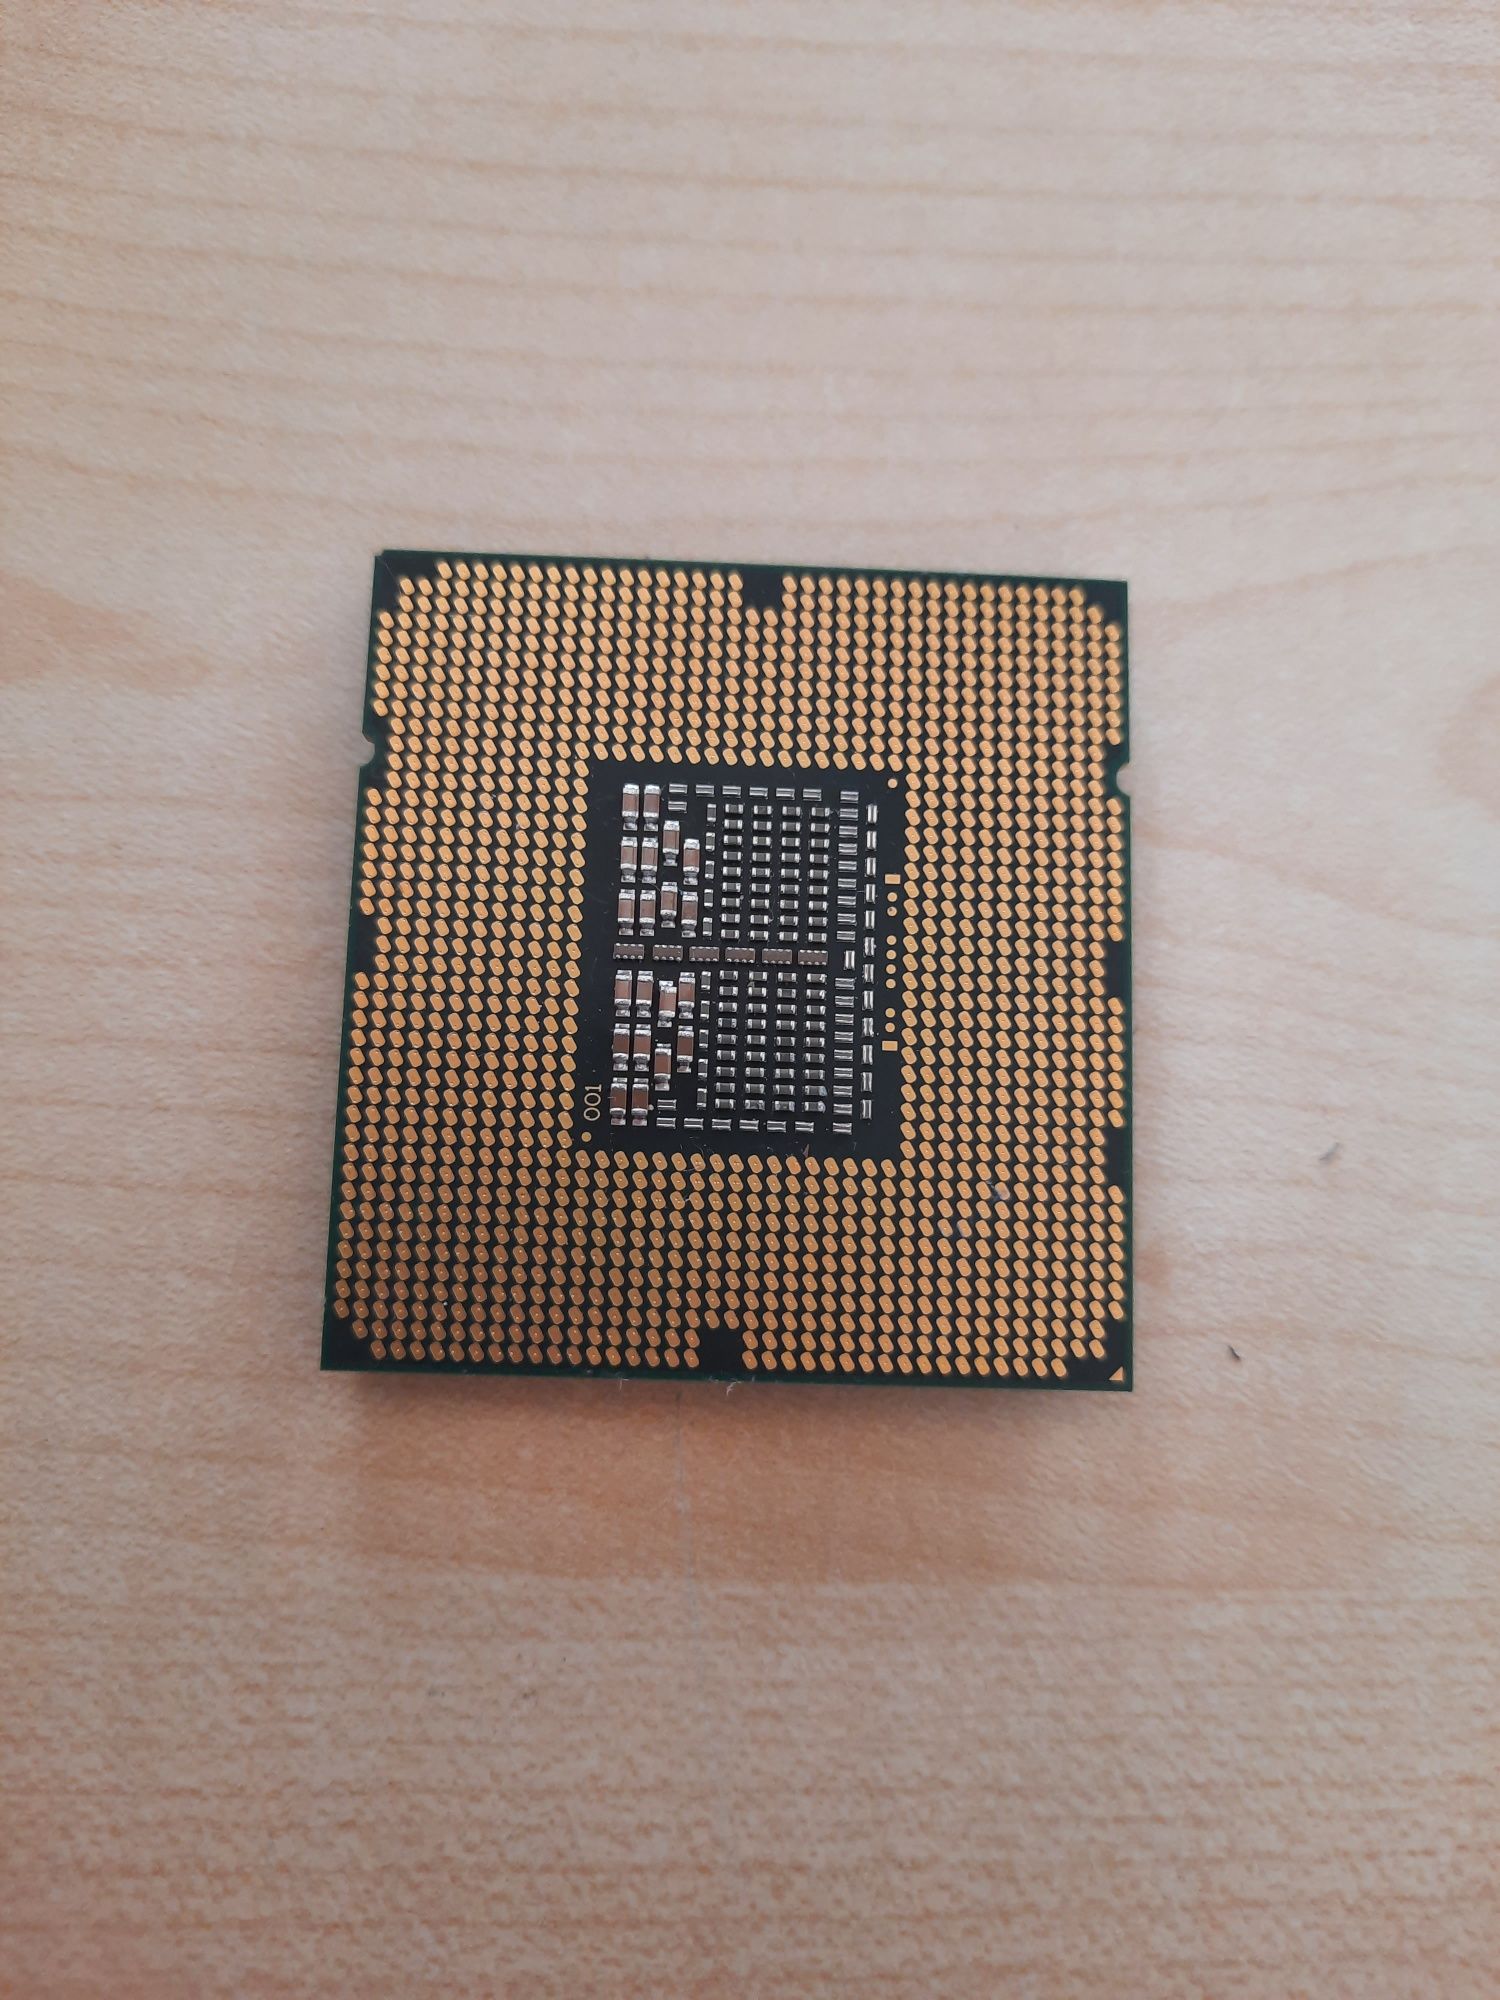 Intel - X5550 - Intel Xeon X5550 SLBF5 QC Processor